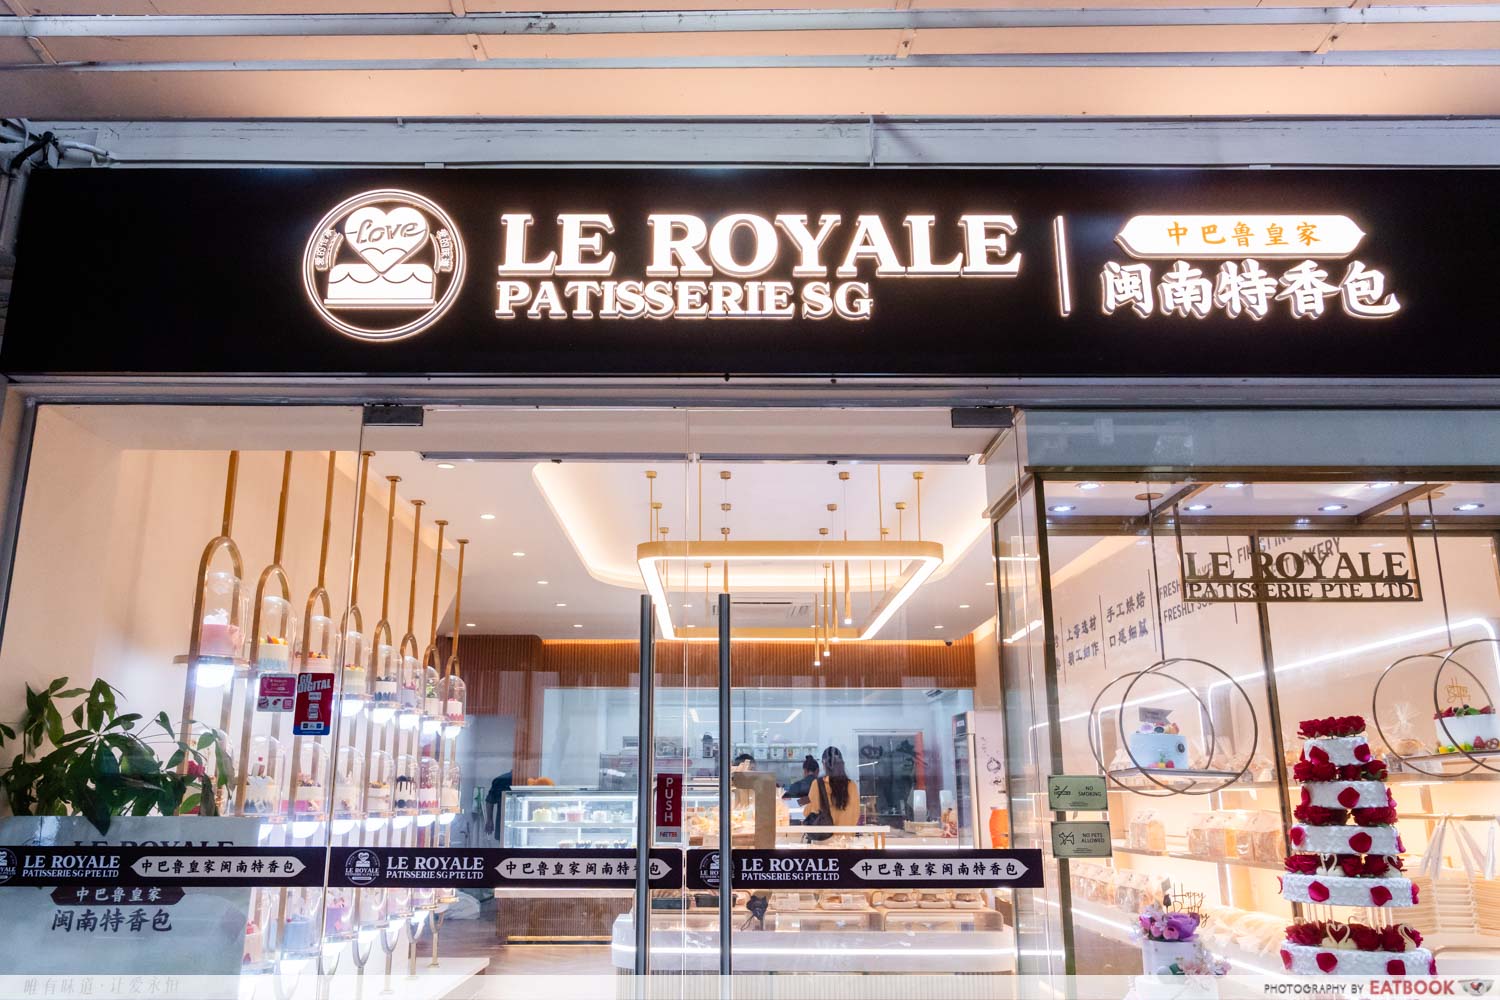 Le-Royale-Patisserie-storefront (1)